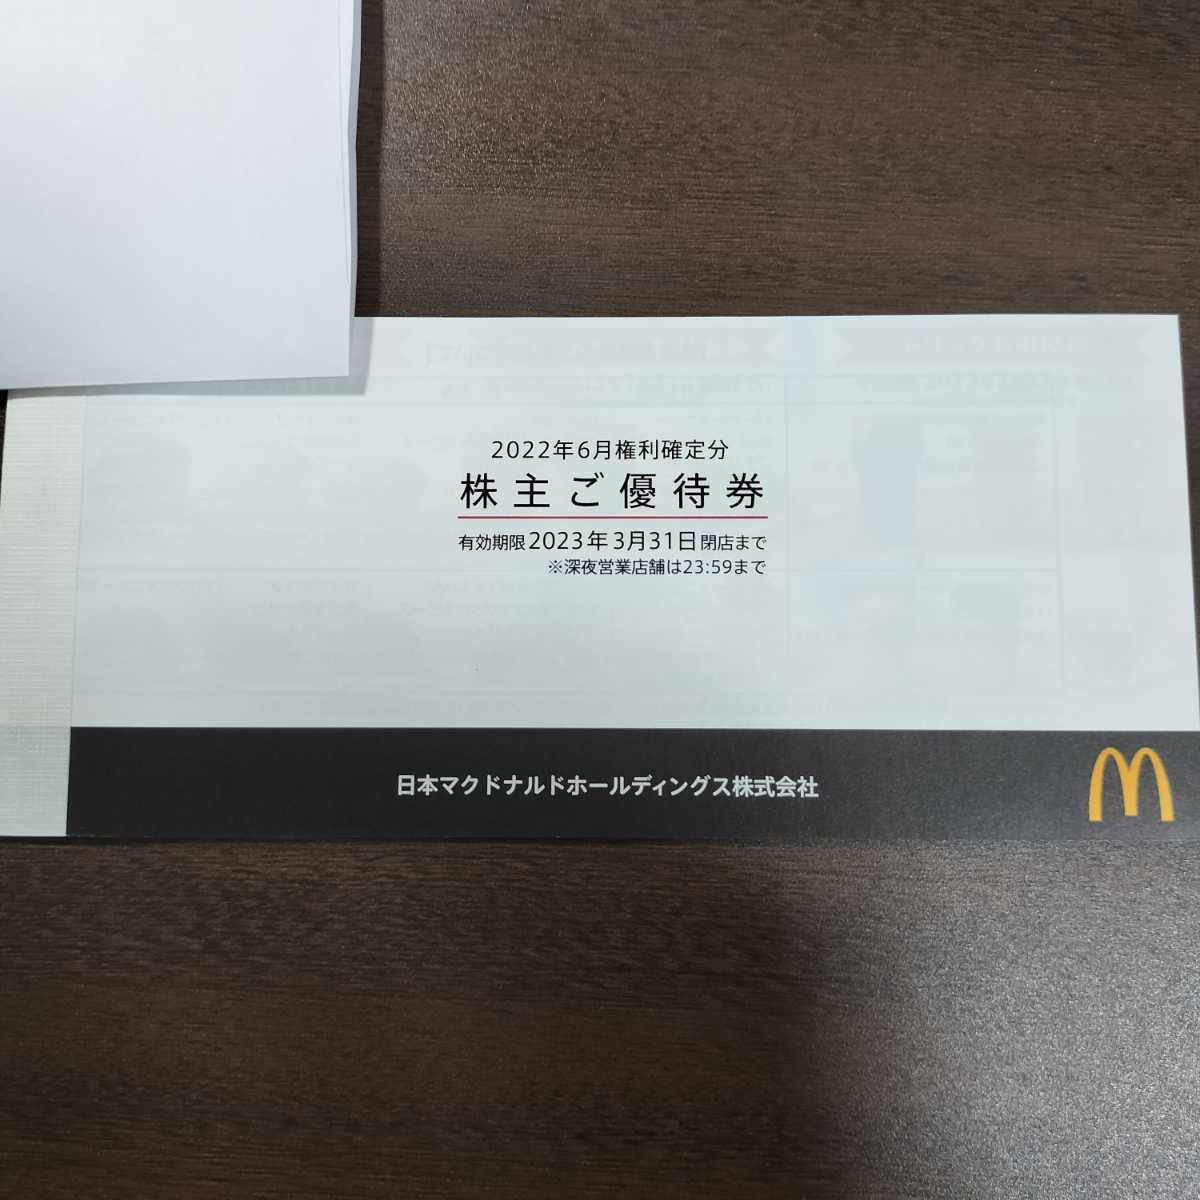  stock 5 pcs. * newest * McDonald's stockholder complimentary ticket 1 pcs. (6 sheets ..)B